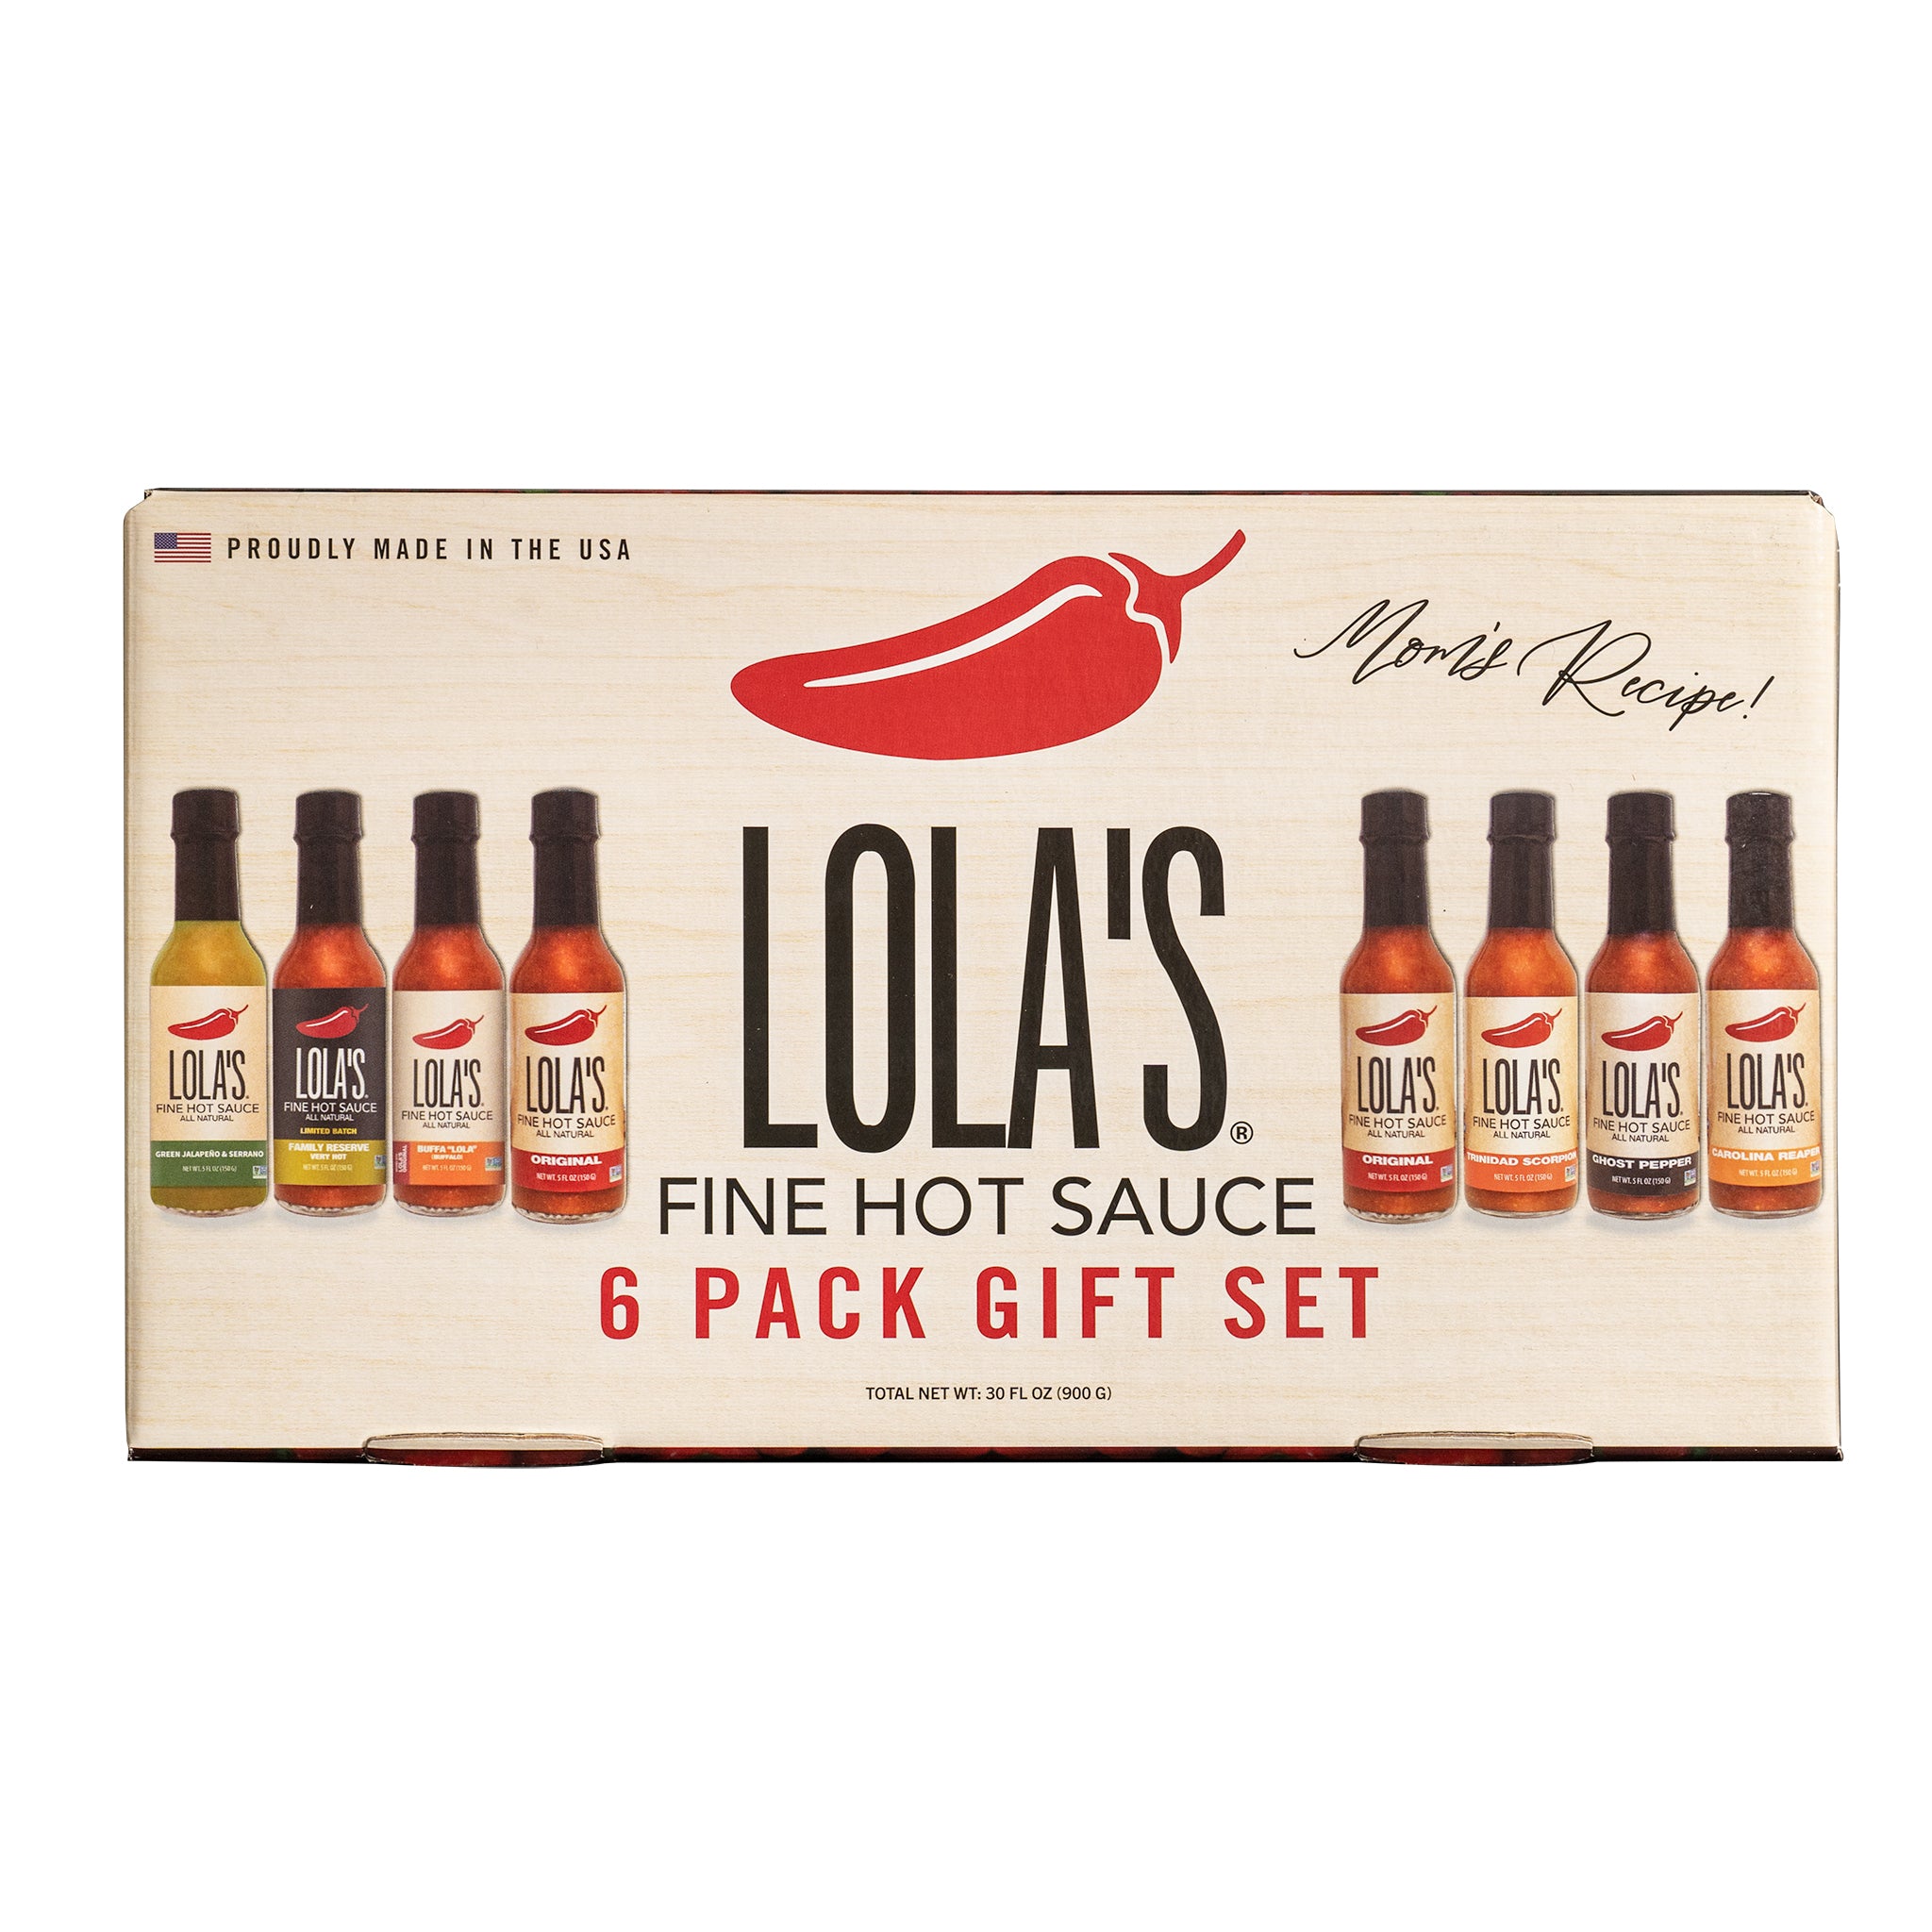 Hot sauce gift sets